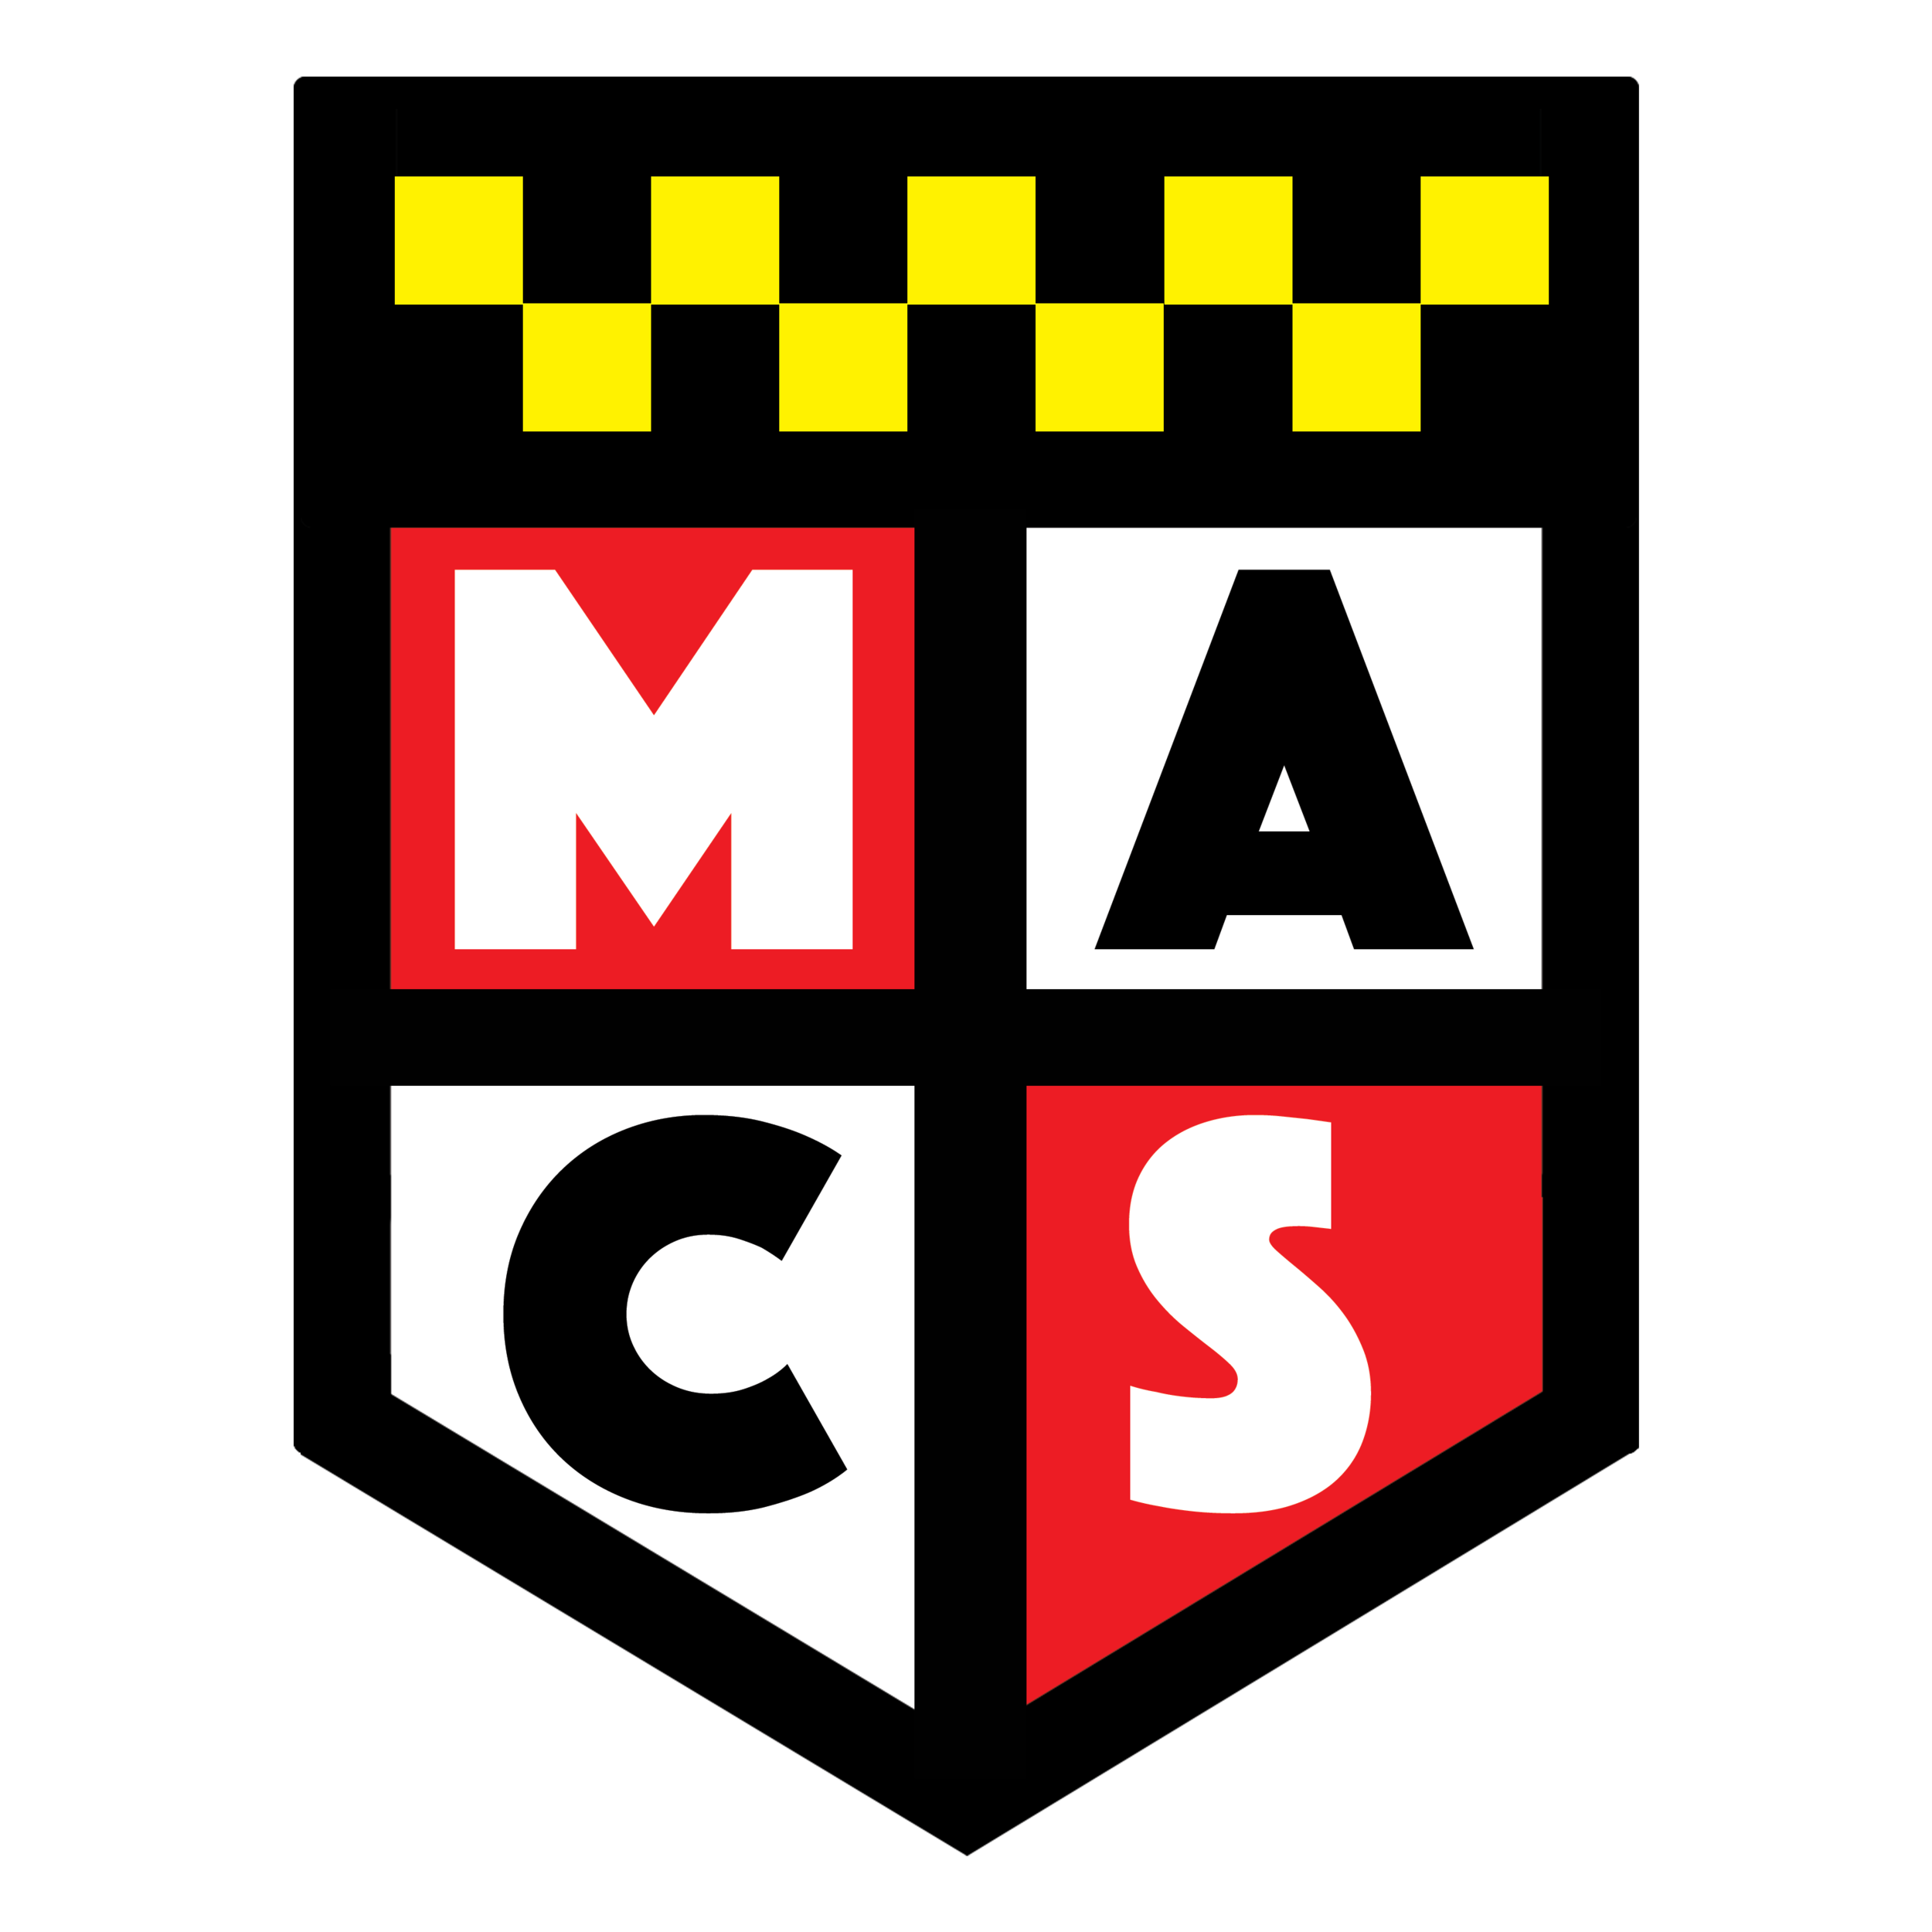 MACSAC — Maryland Association of Christian Schools